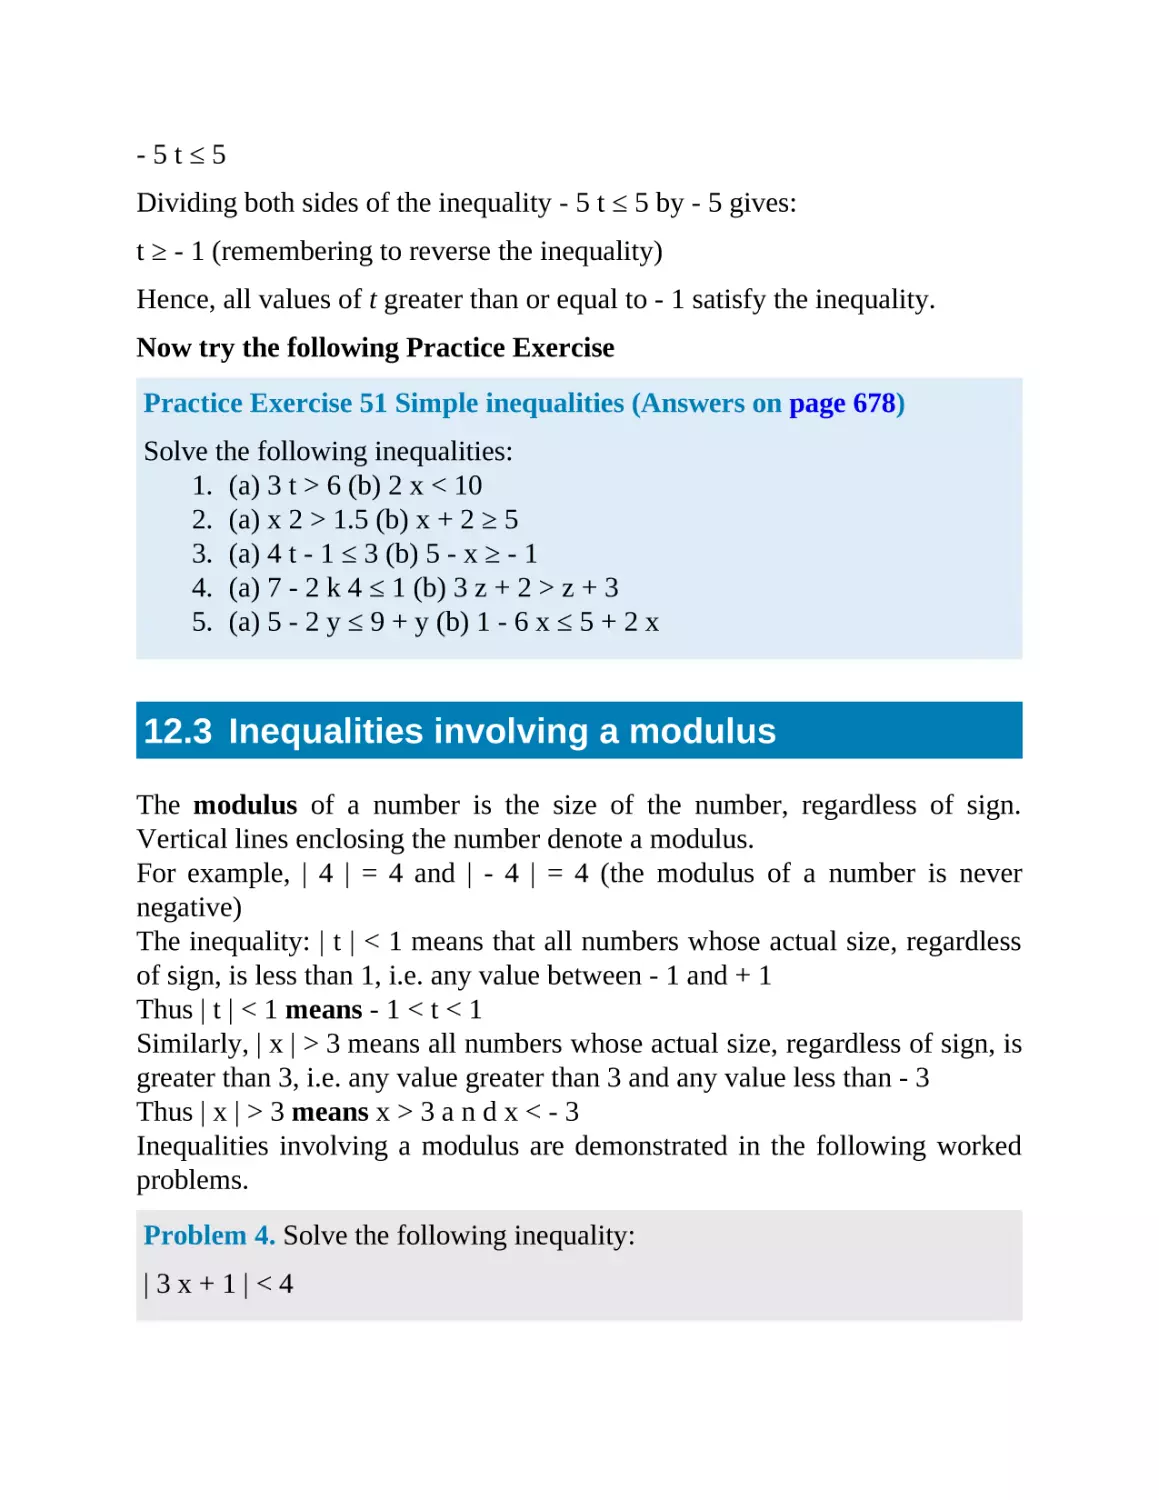 12.3 Inequalities involving a modulus